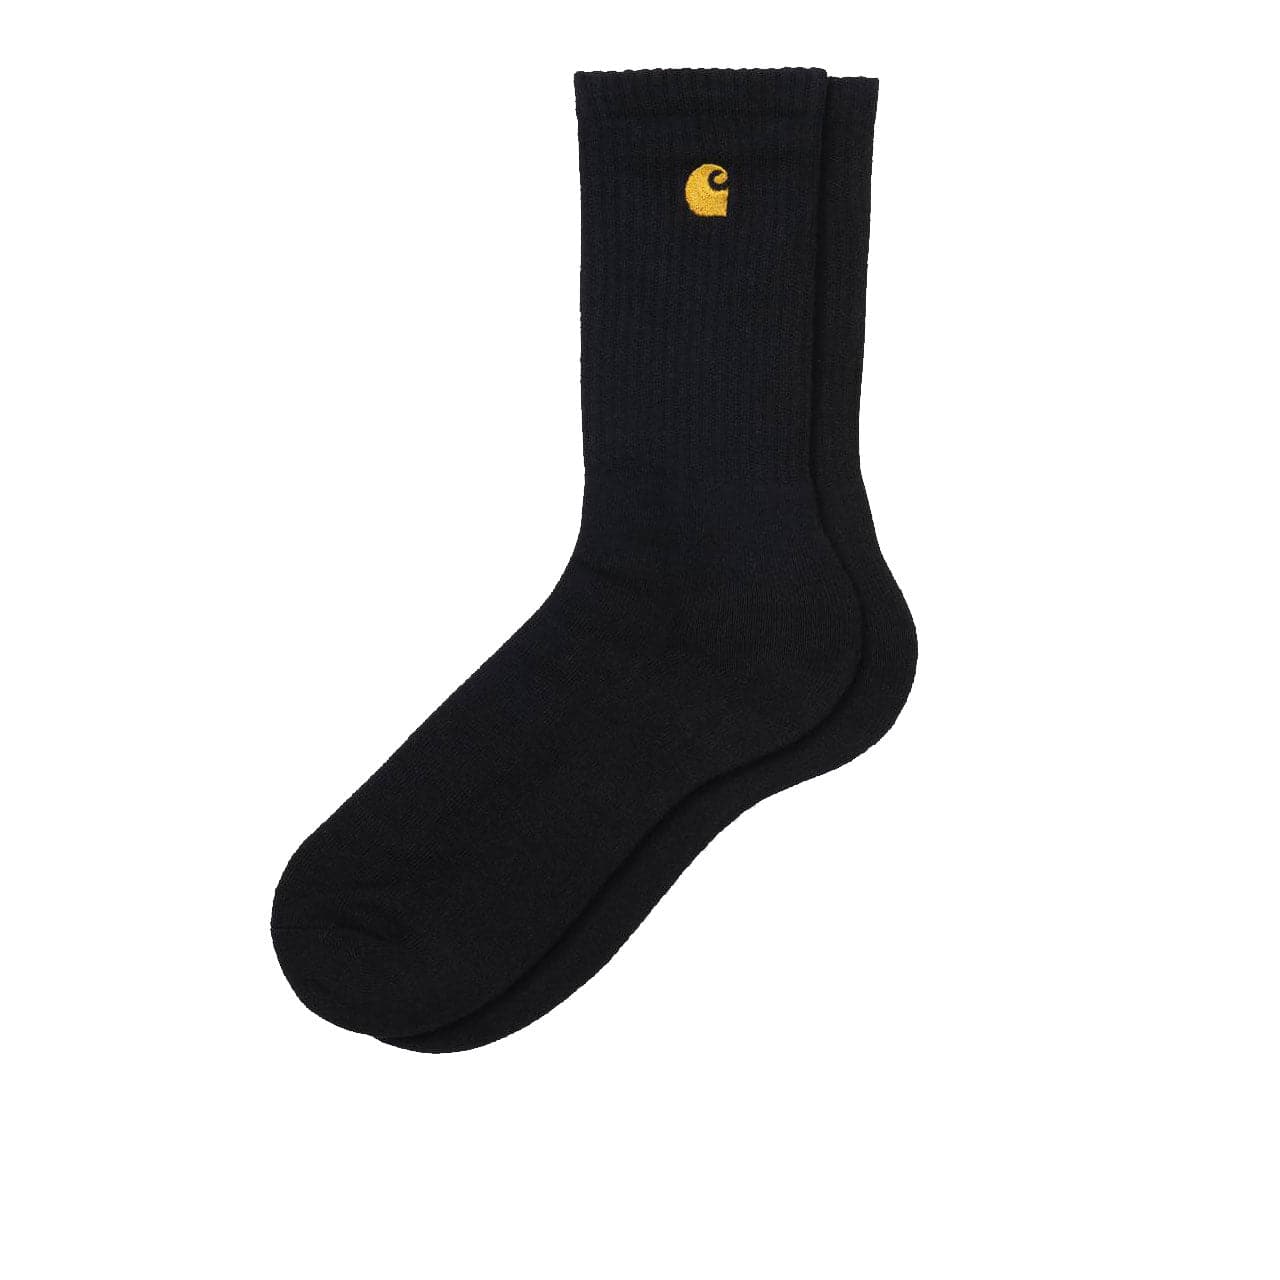 Image of Carhartt WIP Chase Socks (Black / Gold)